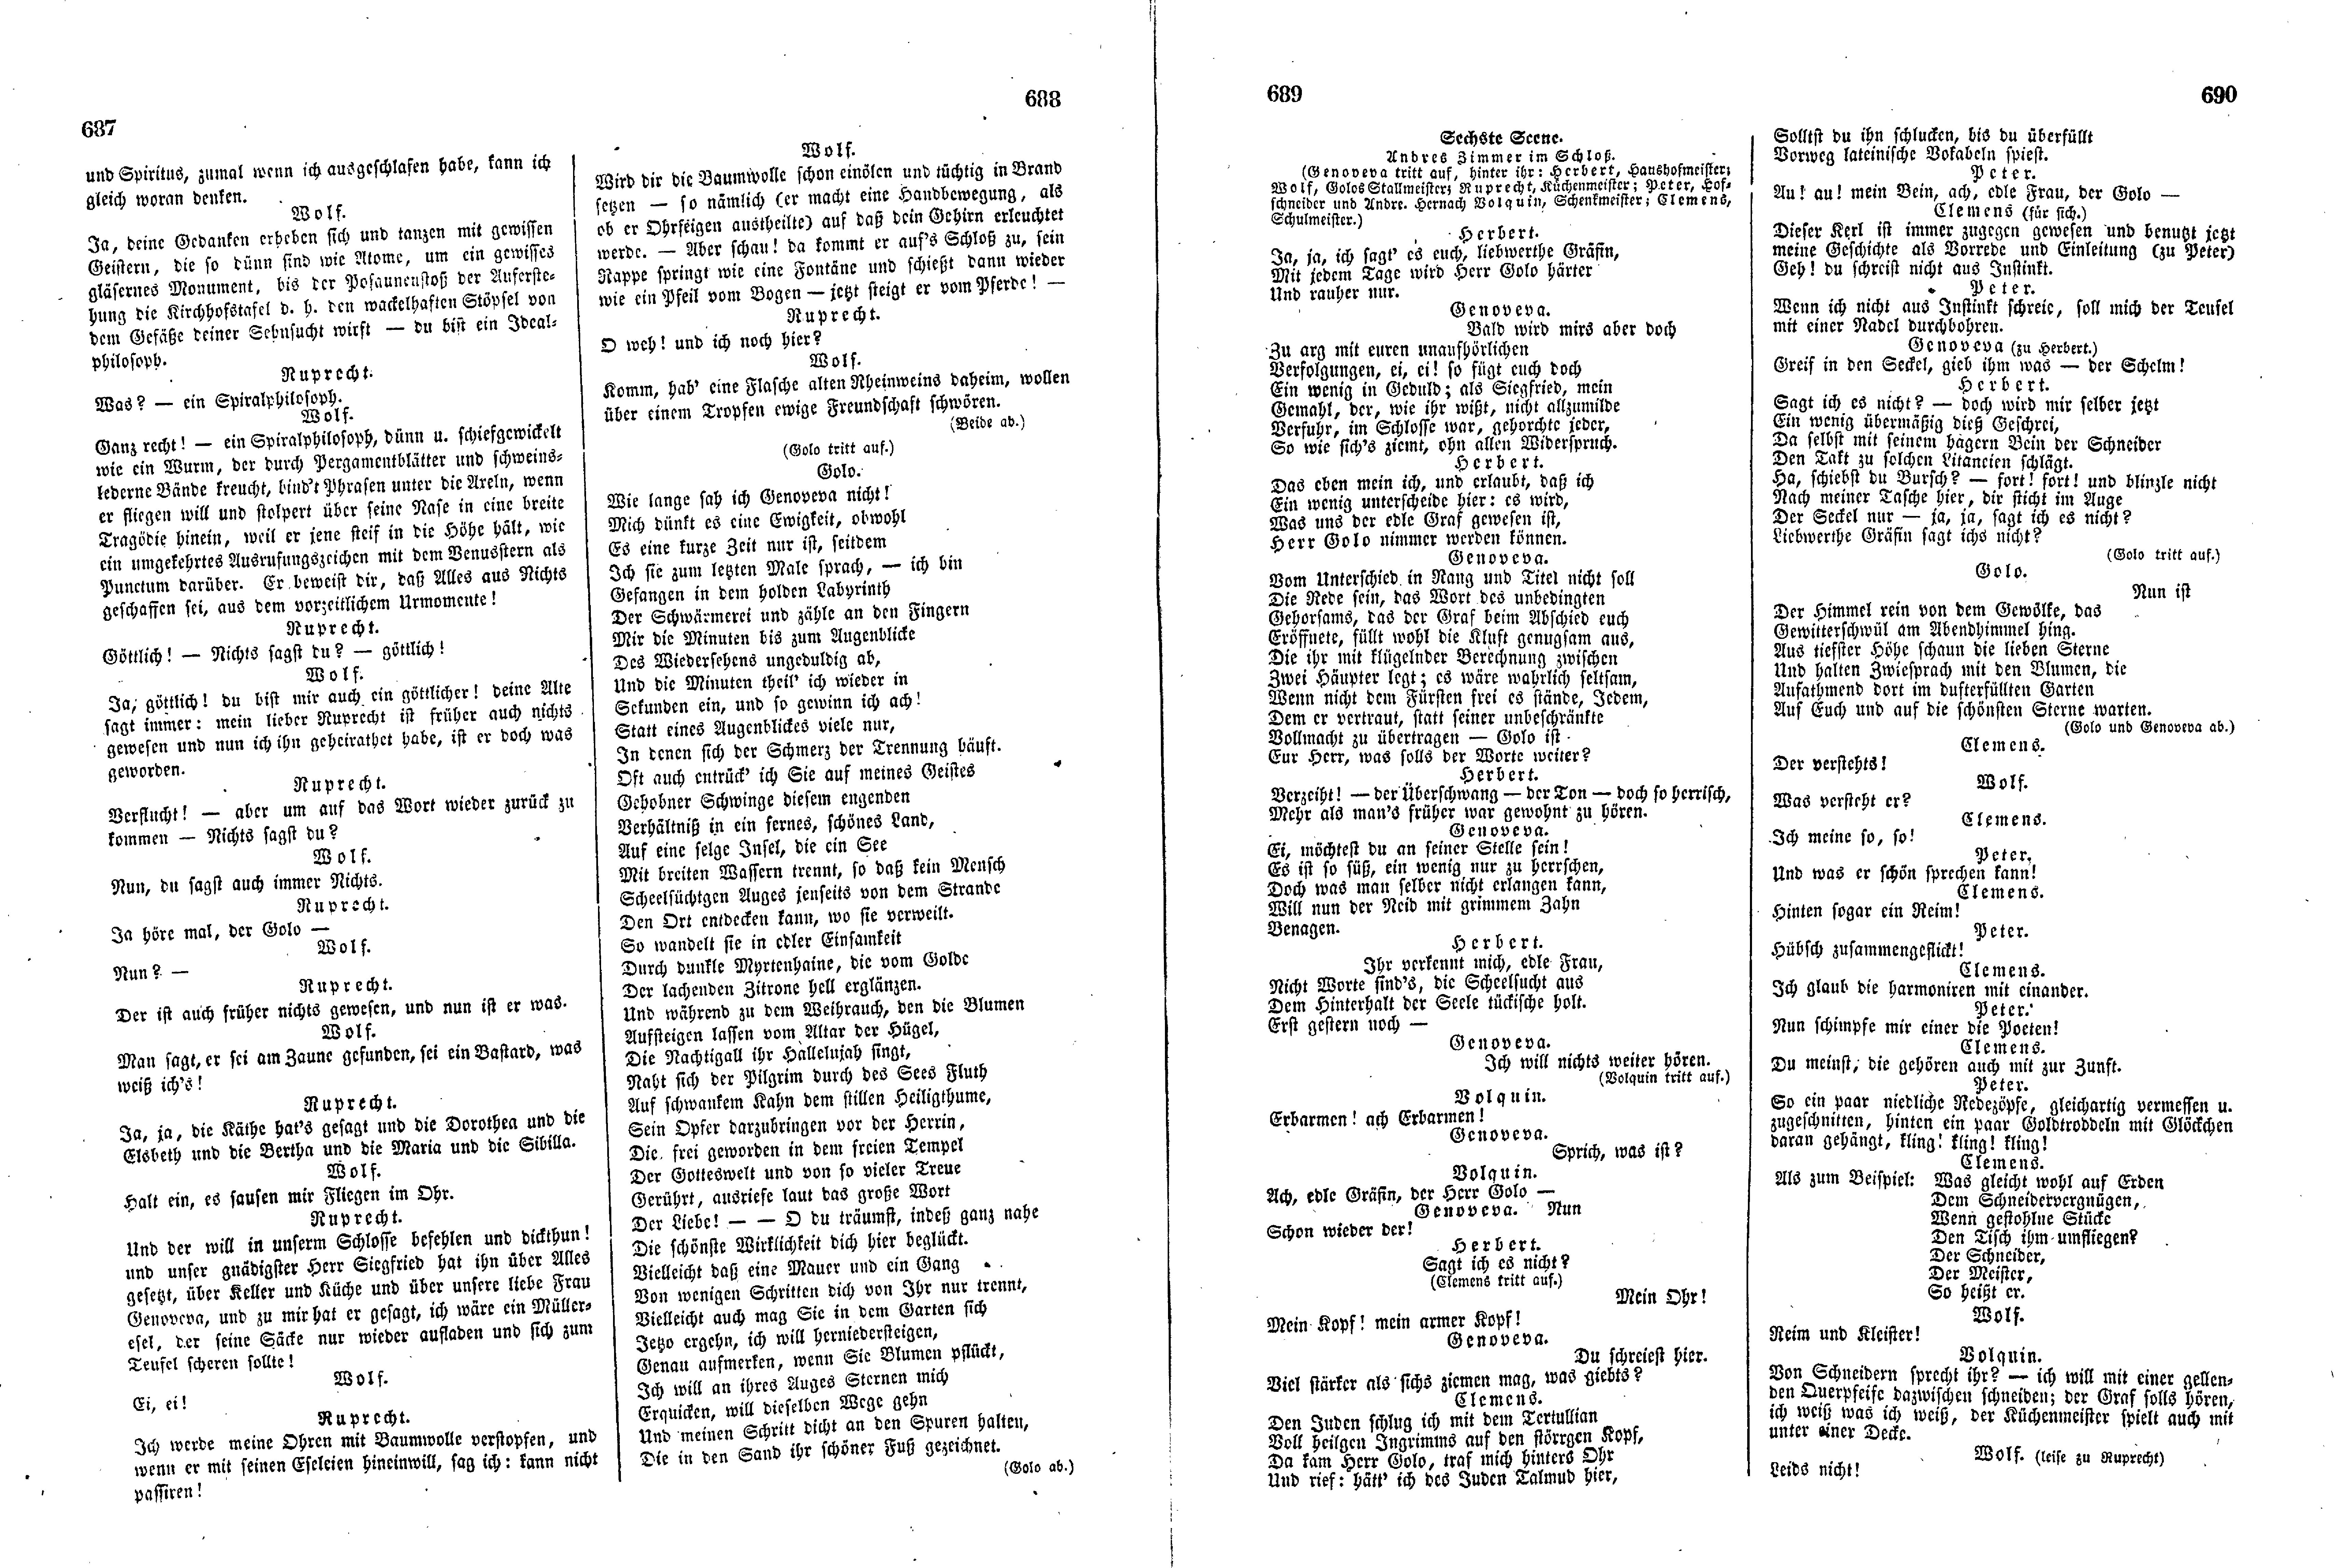 Das Inland [11] (1846) | 177. (687-690) Main body of text